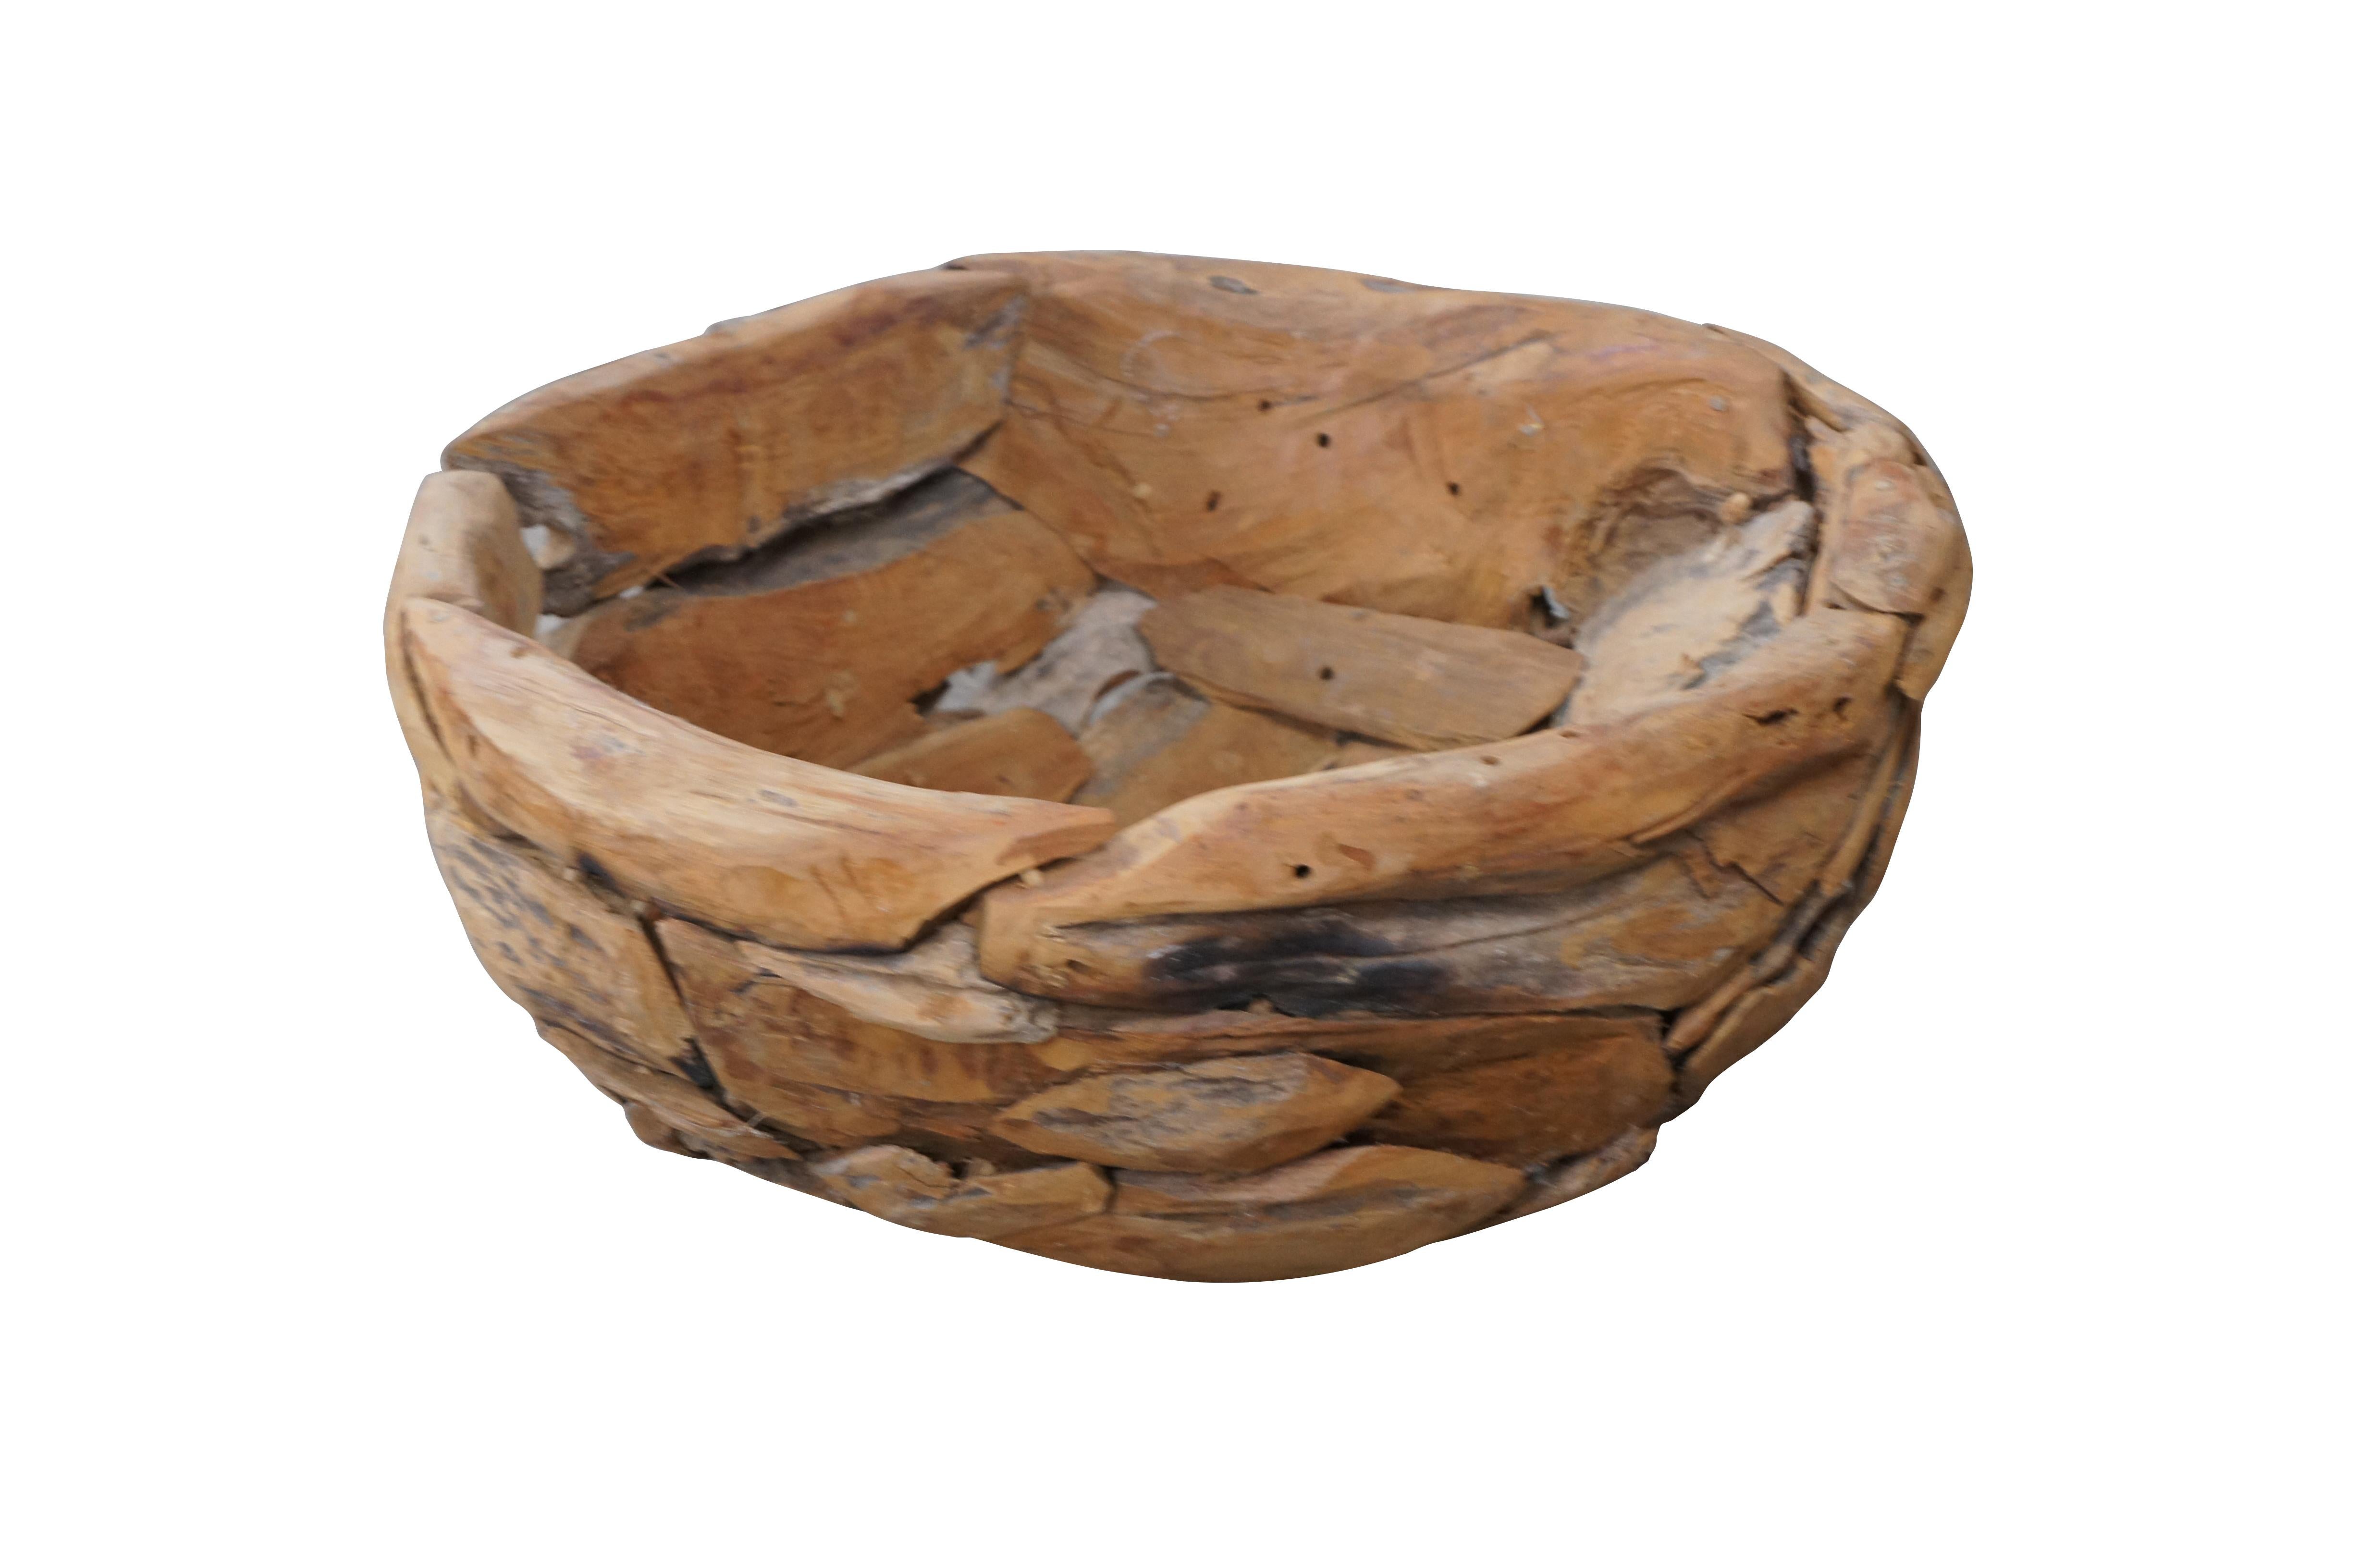 Rustic Large Natural Teak Driftwood Bowl Centerpiece Basket Planter Jardiniere 24